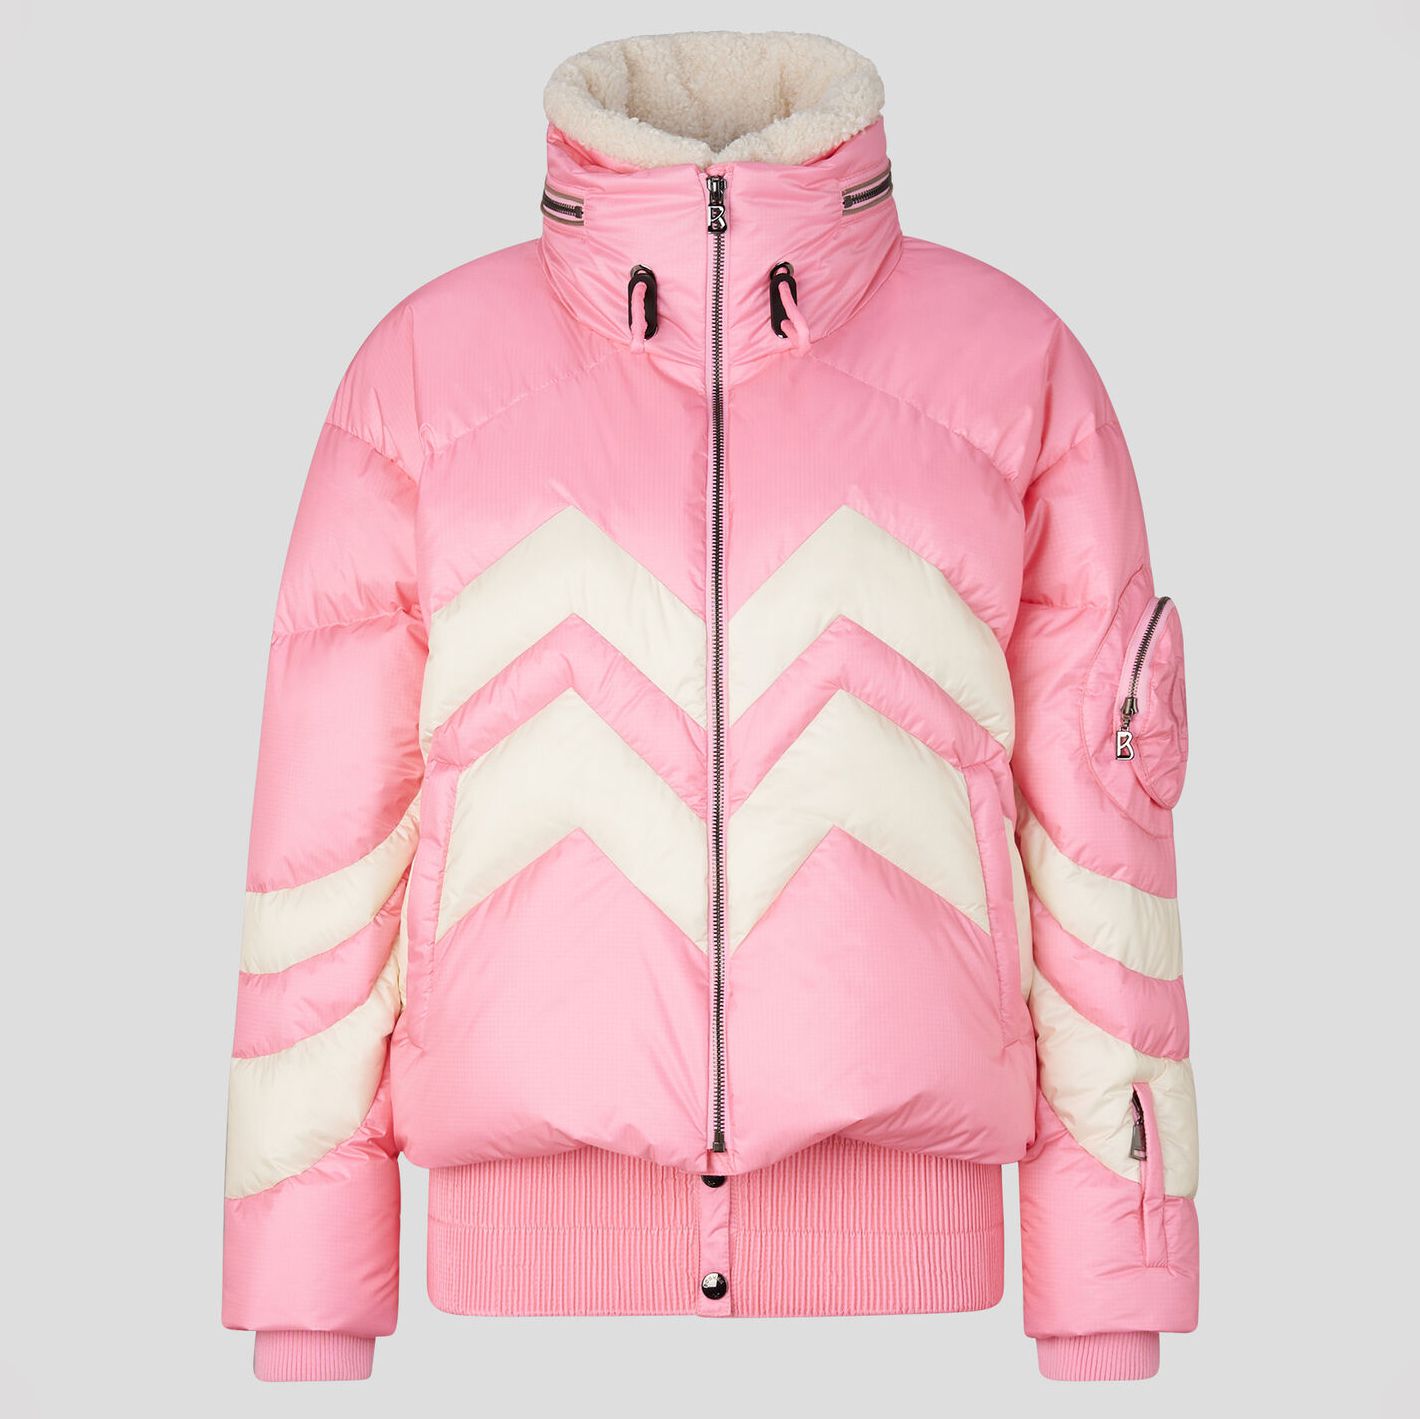 Valea down ski jacket in Pink/Off-white